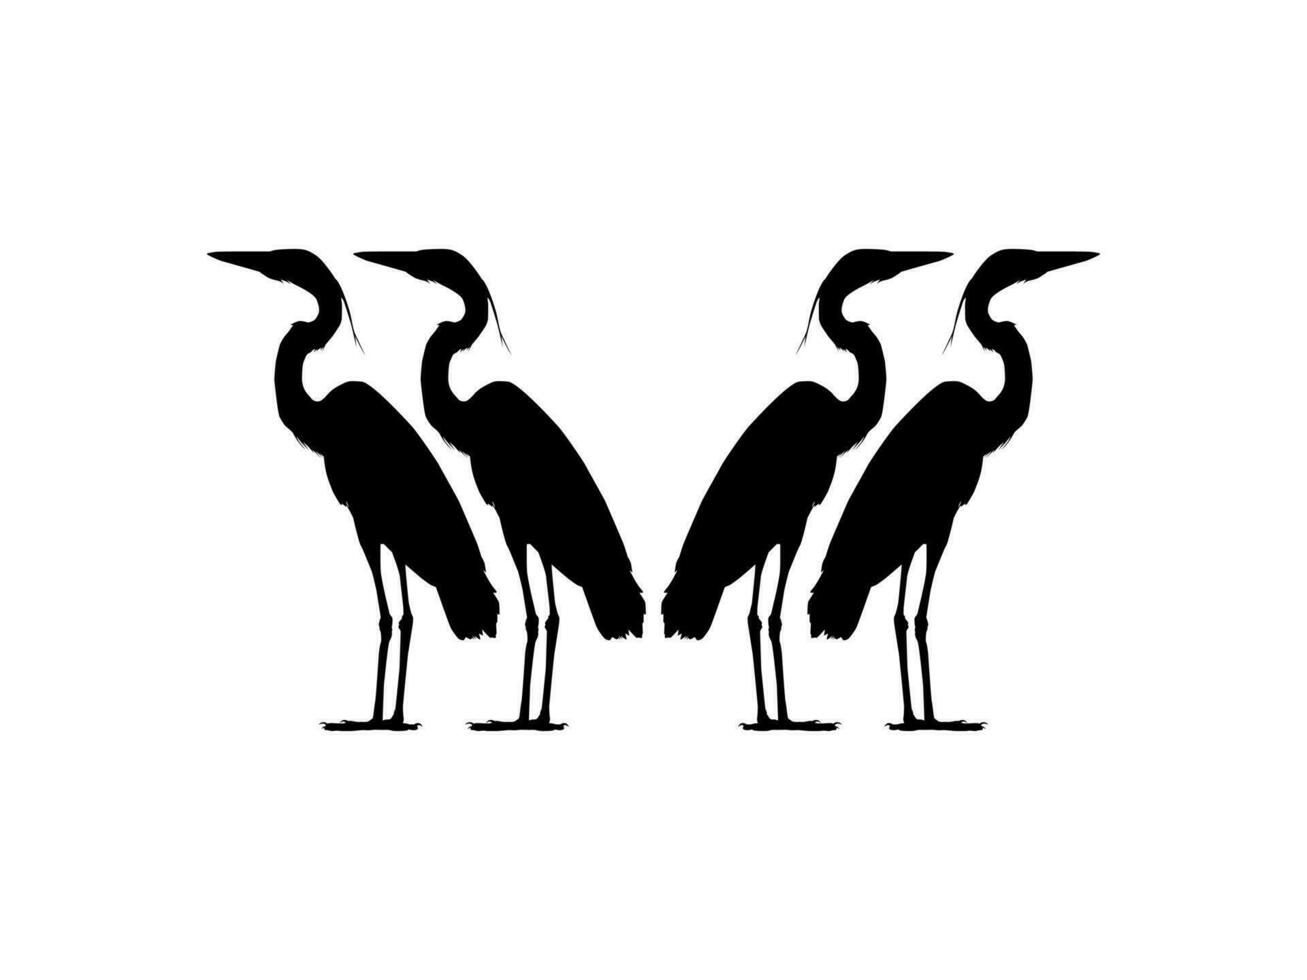 Flock of The Black Heron Bird, Egretta Ardesiaca, also known as the Black Egret Silhouette for Art Illustration, Logo, Pictogram, Website, or Graphic Design Element. Vector Illustration